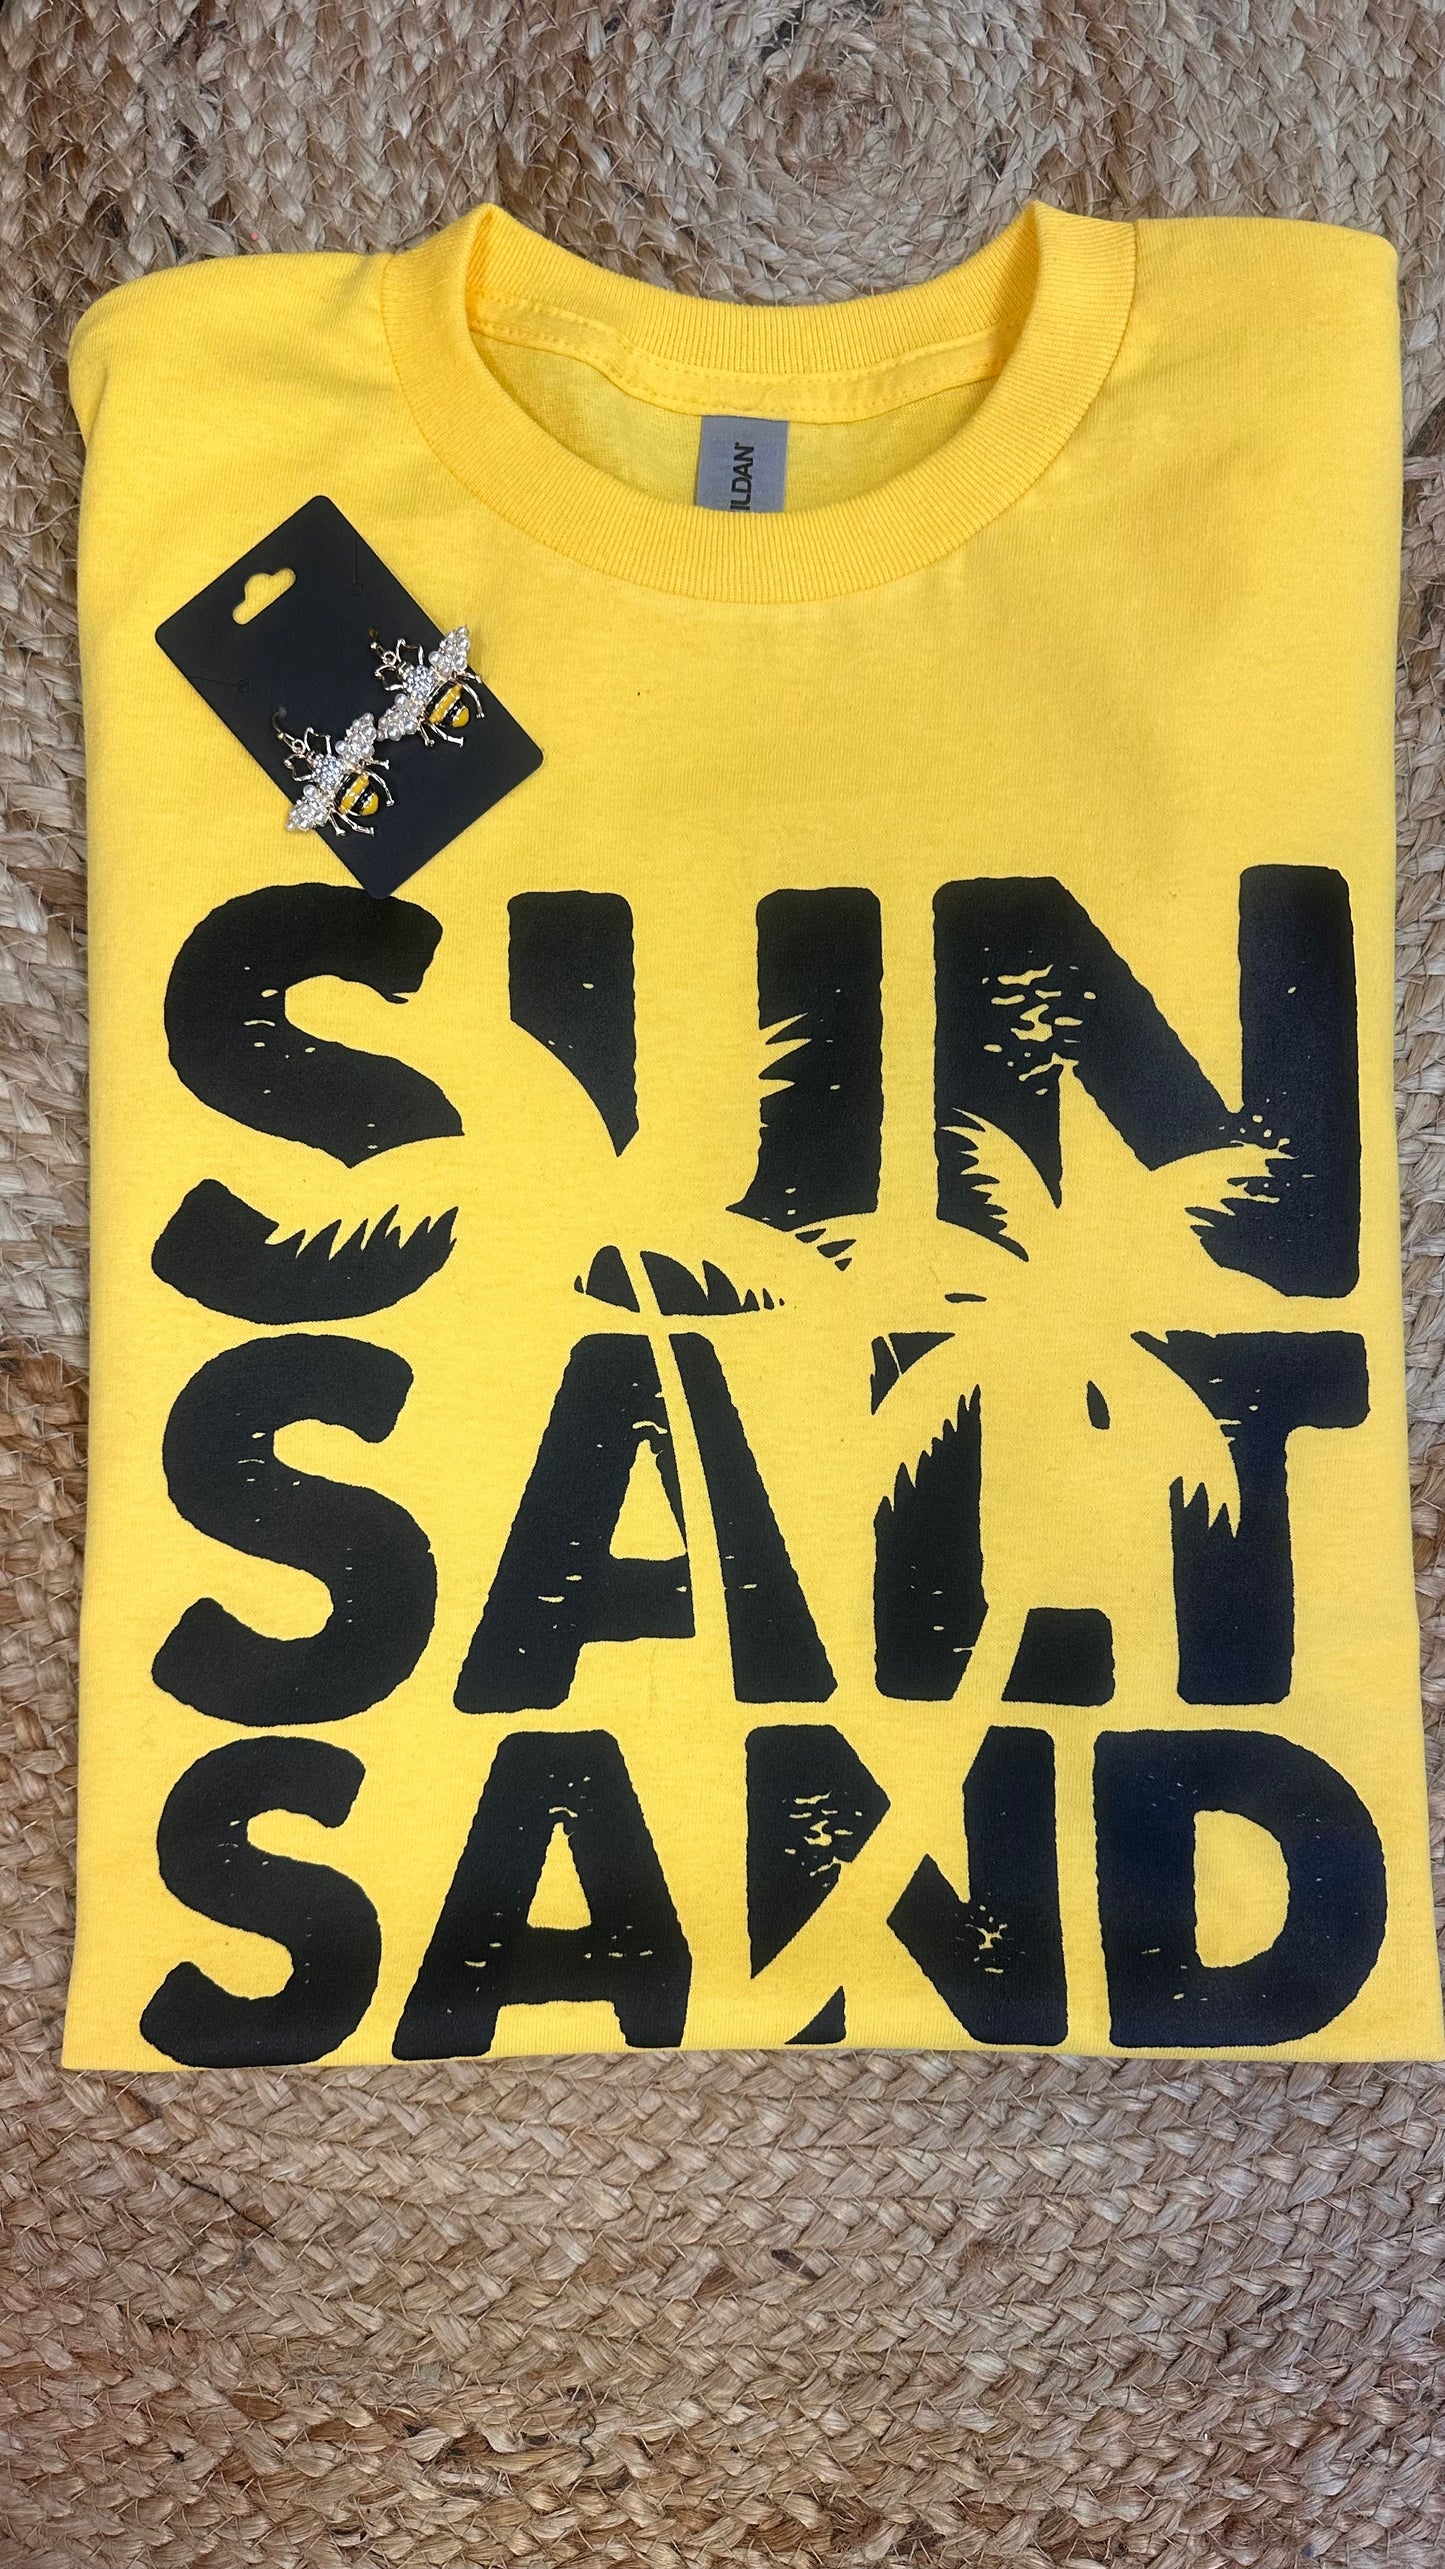 The Sun Salt Sand Tshirt